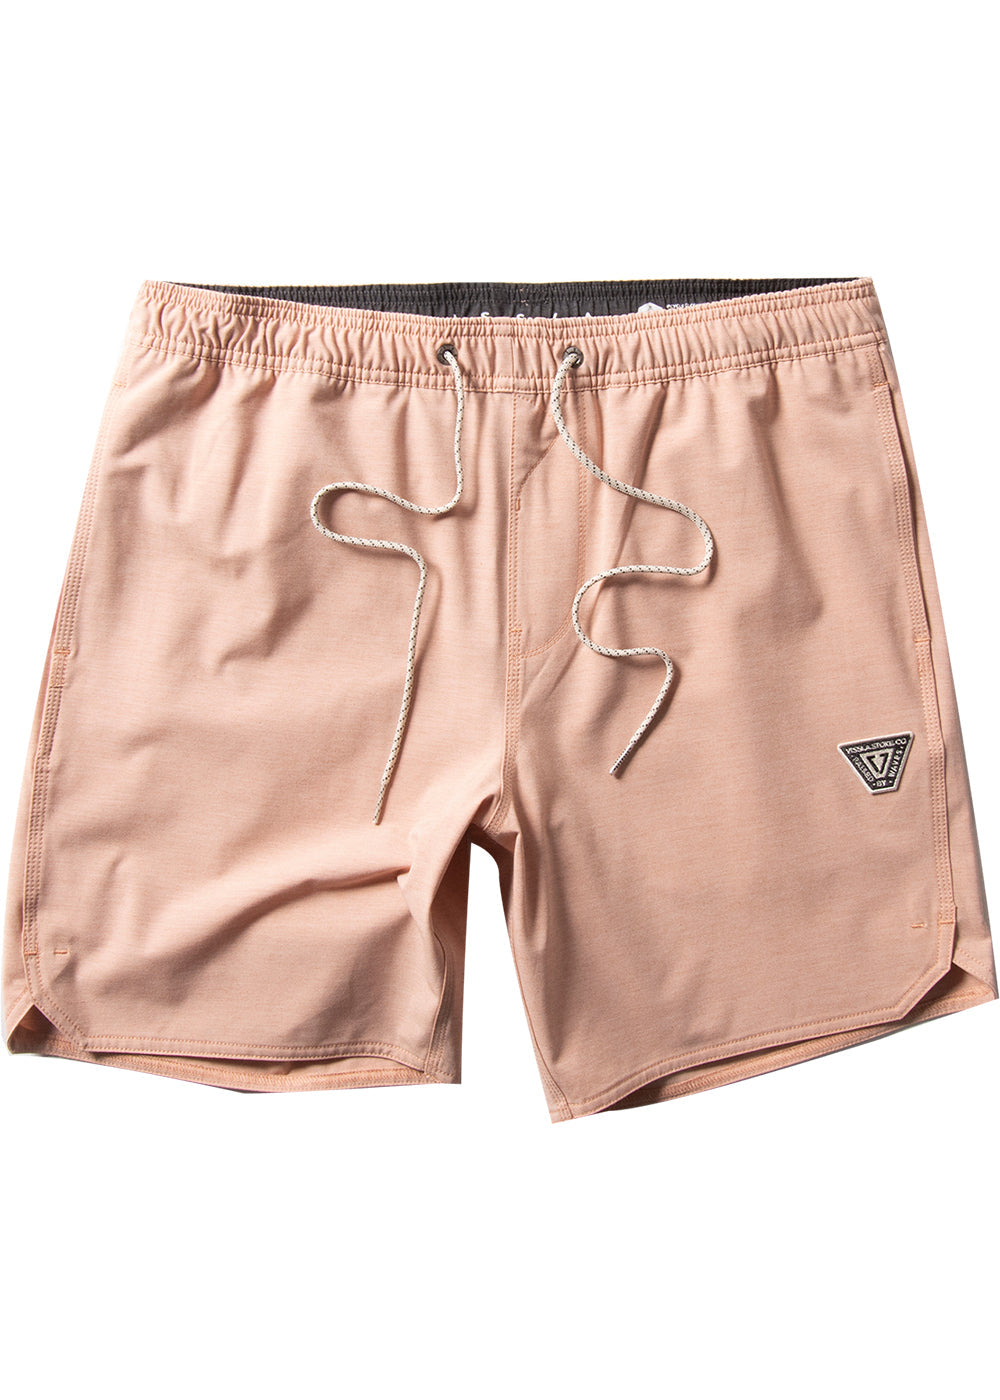 Vissla Solid Sets 17.5" Ecolastic Shorts DOG L